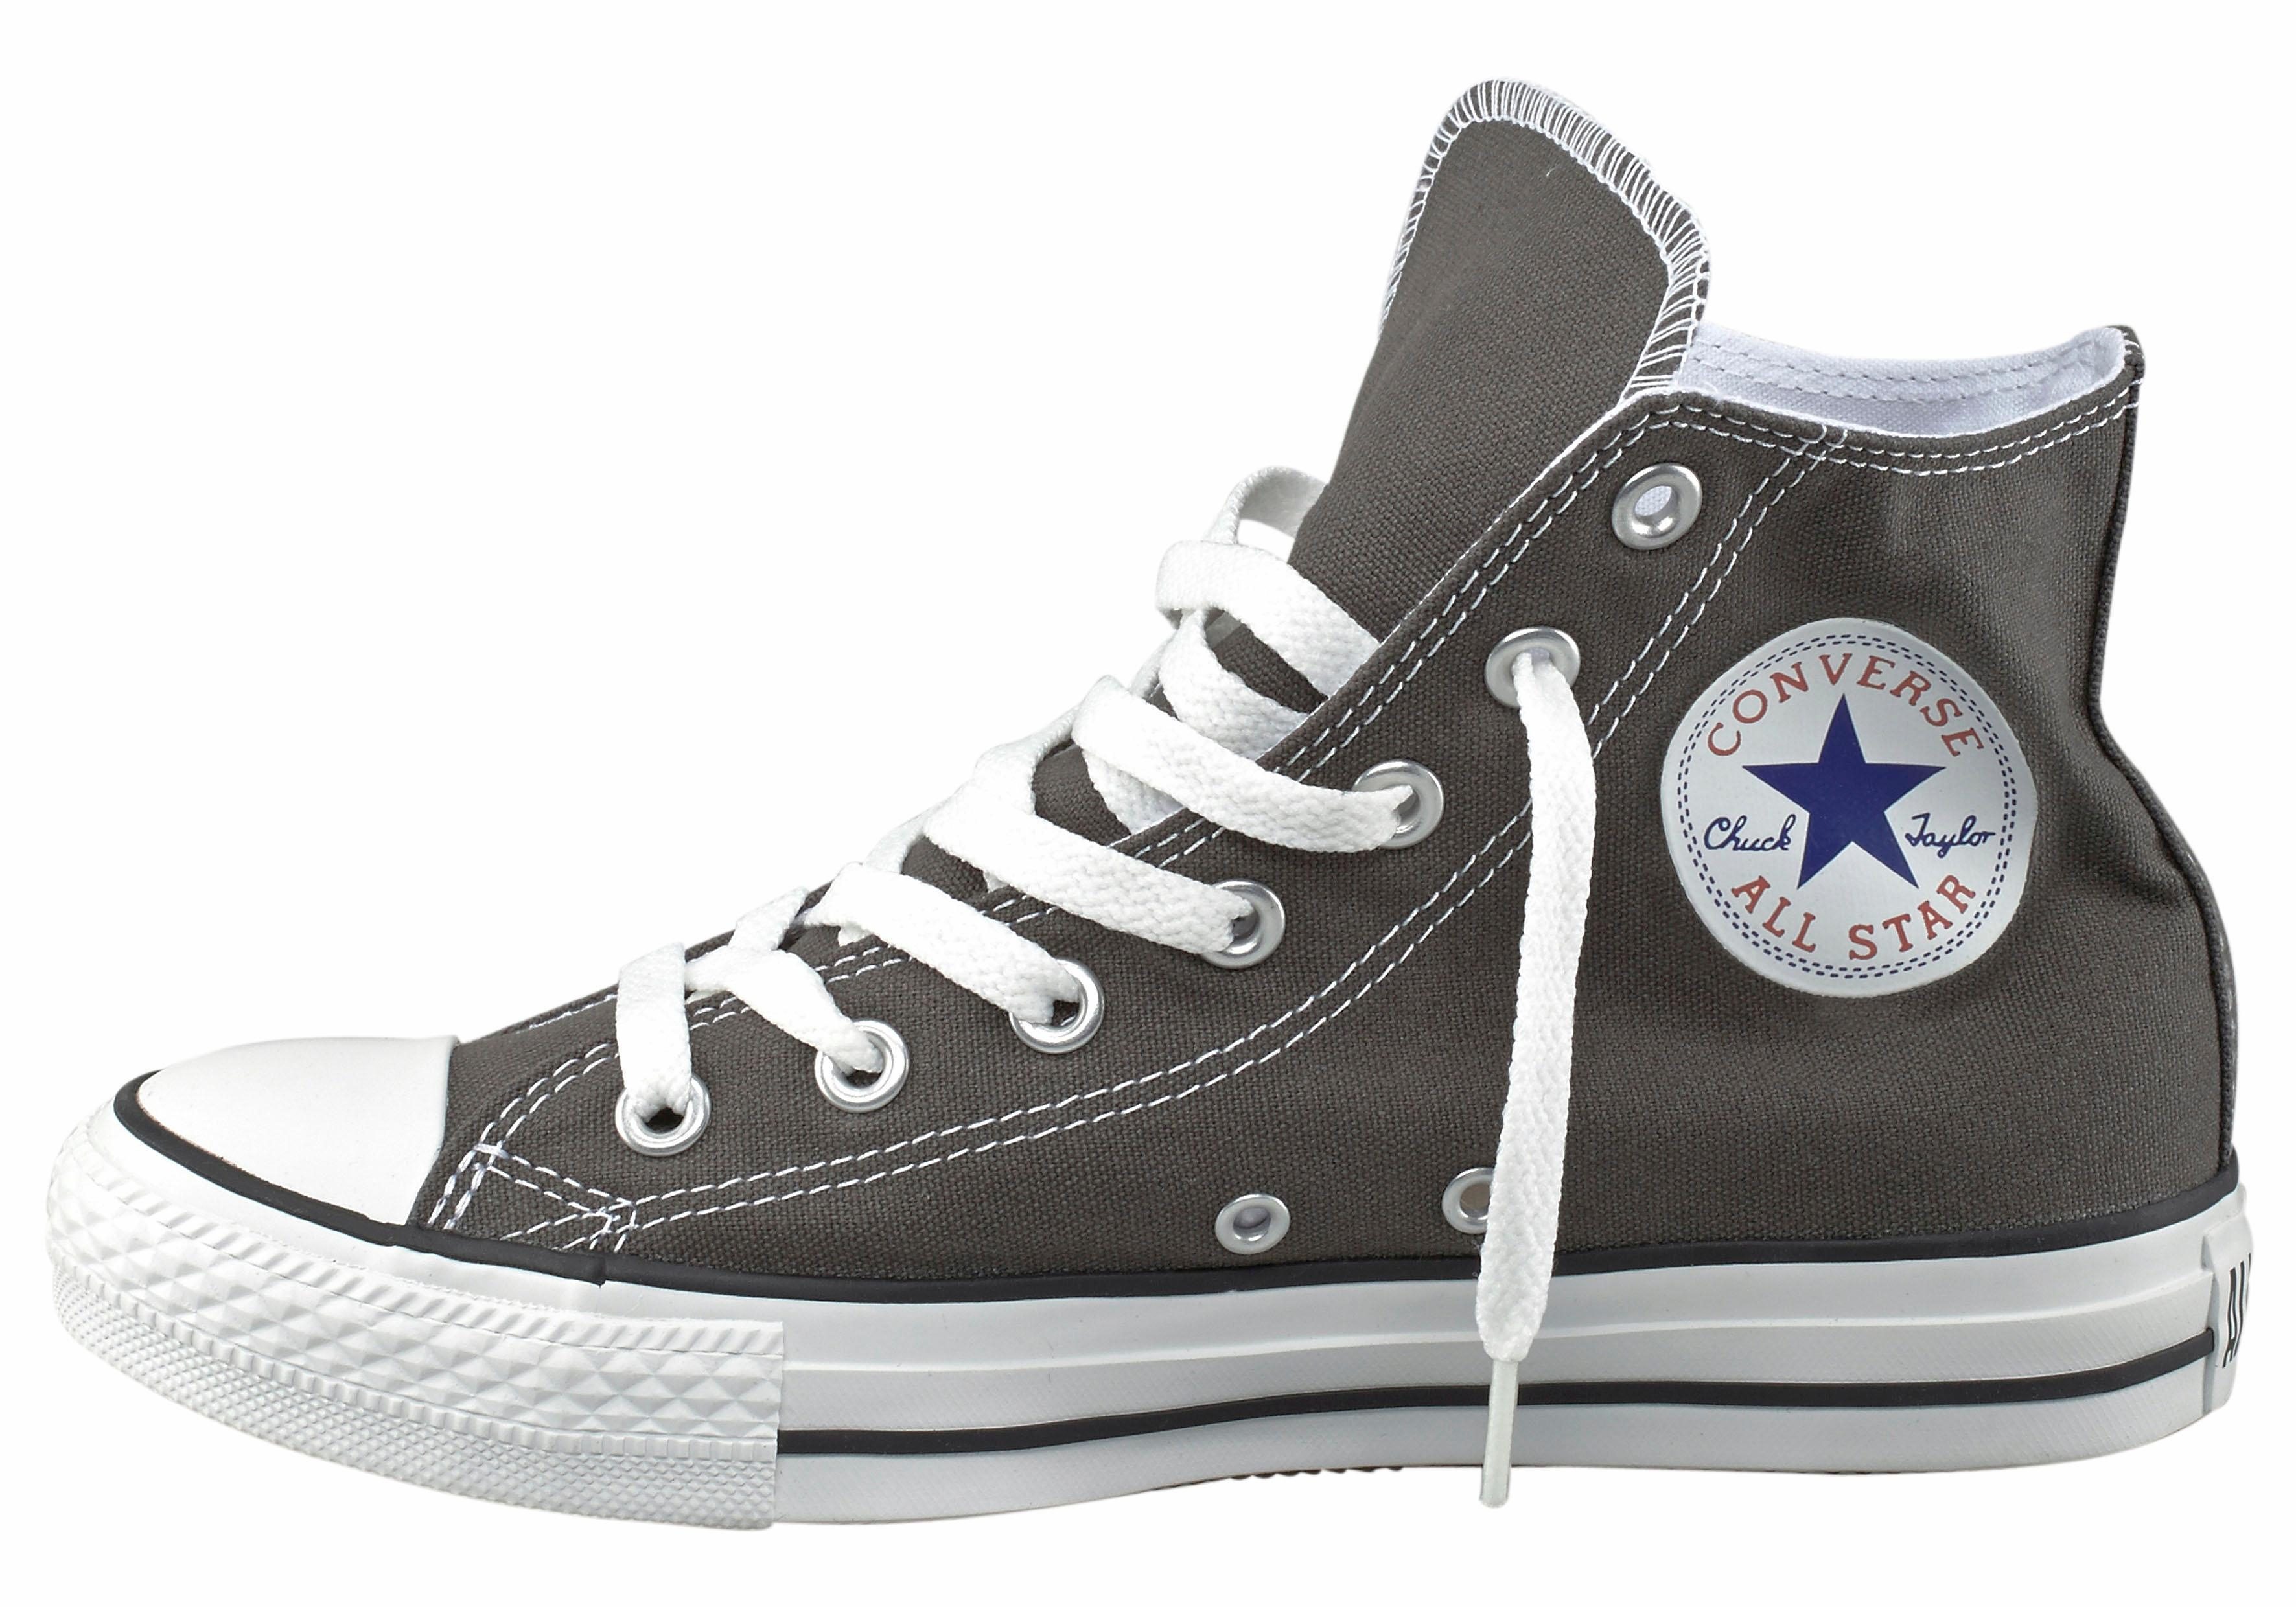 Dochter Matig in de rij gaan staan Converse Sneakers Chuck Taylor All Star Core Hi online bestellen | OTTO